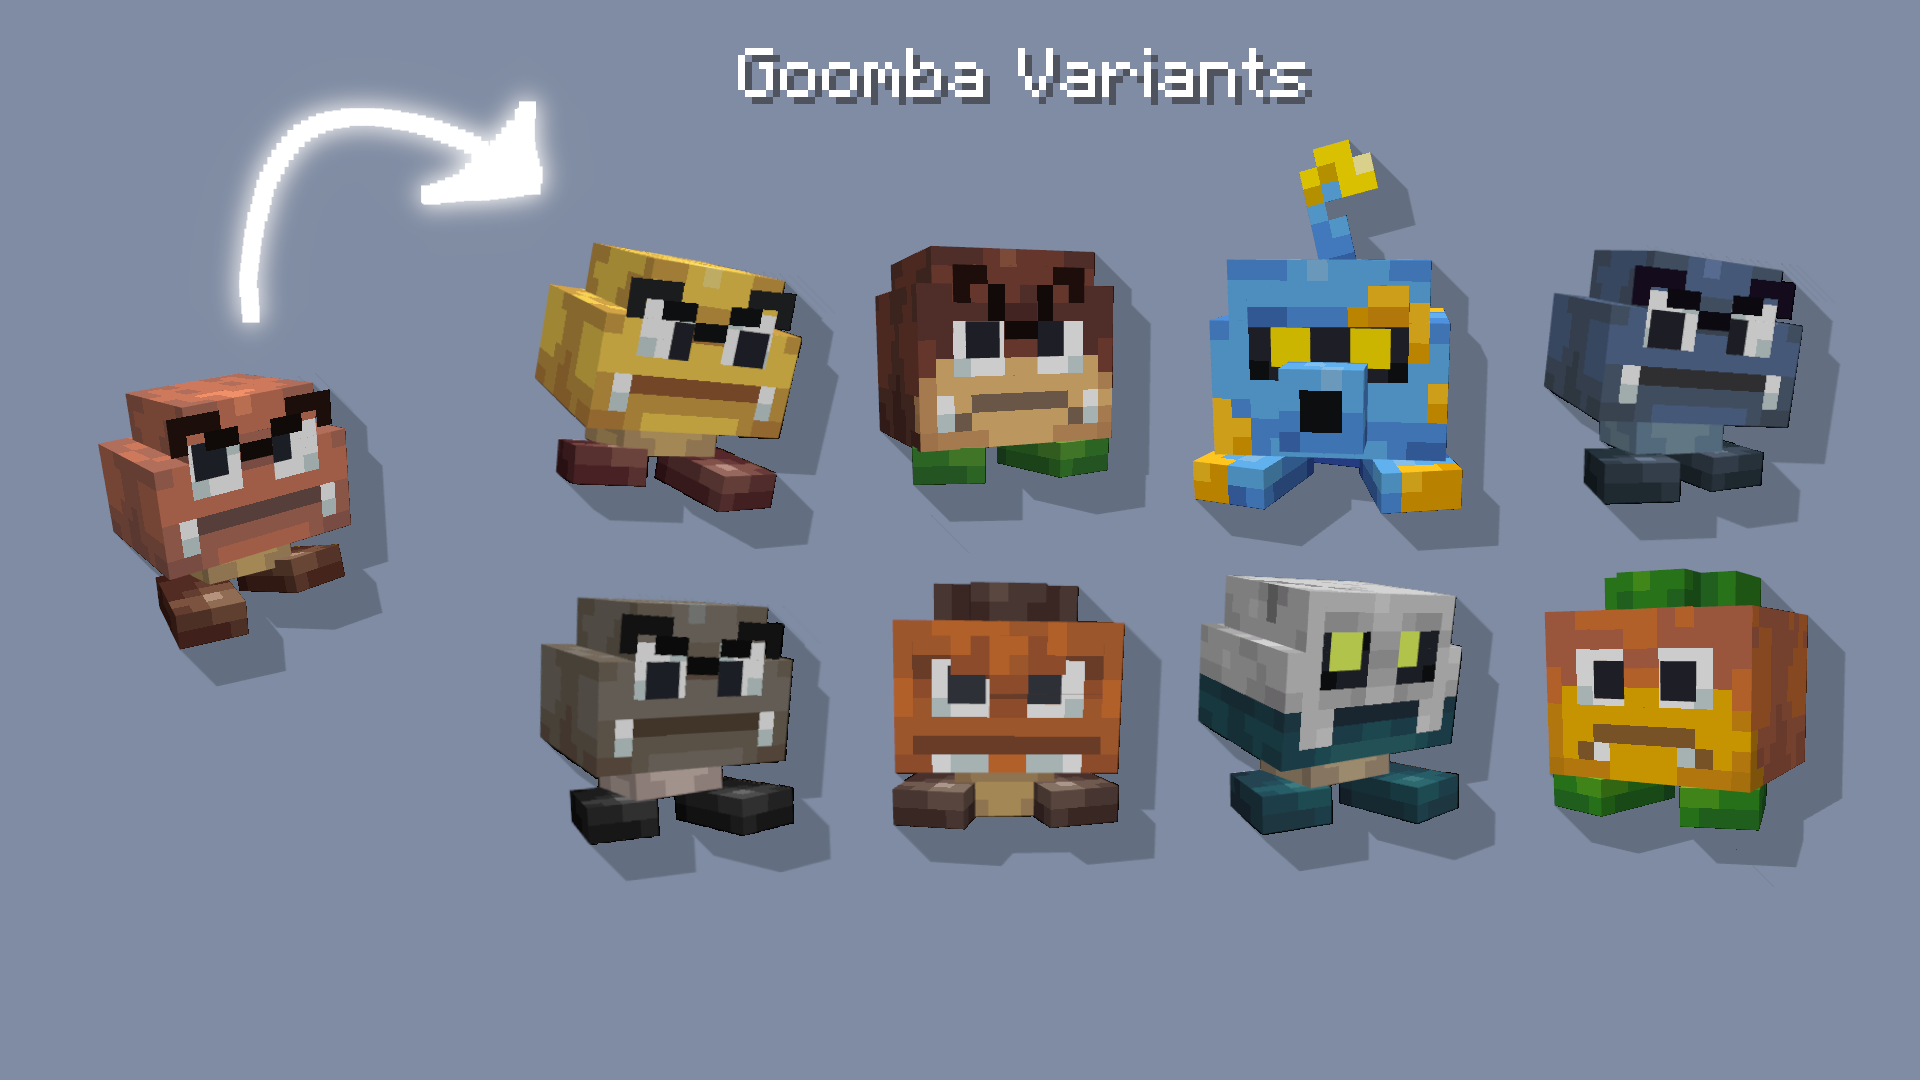 v2.0 Goomba Variants